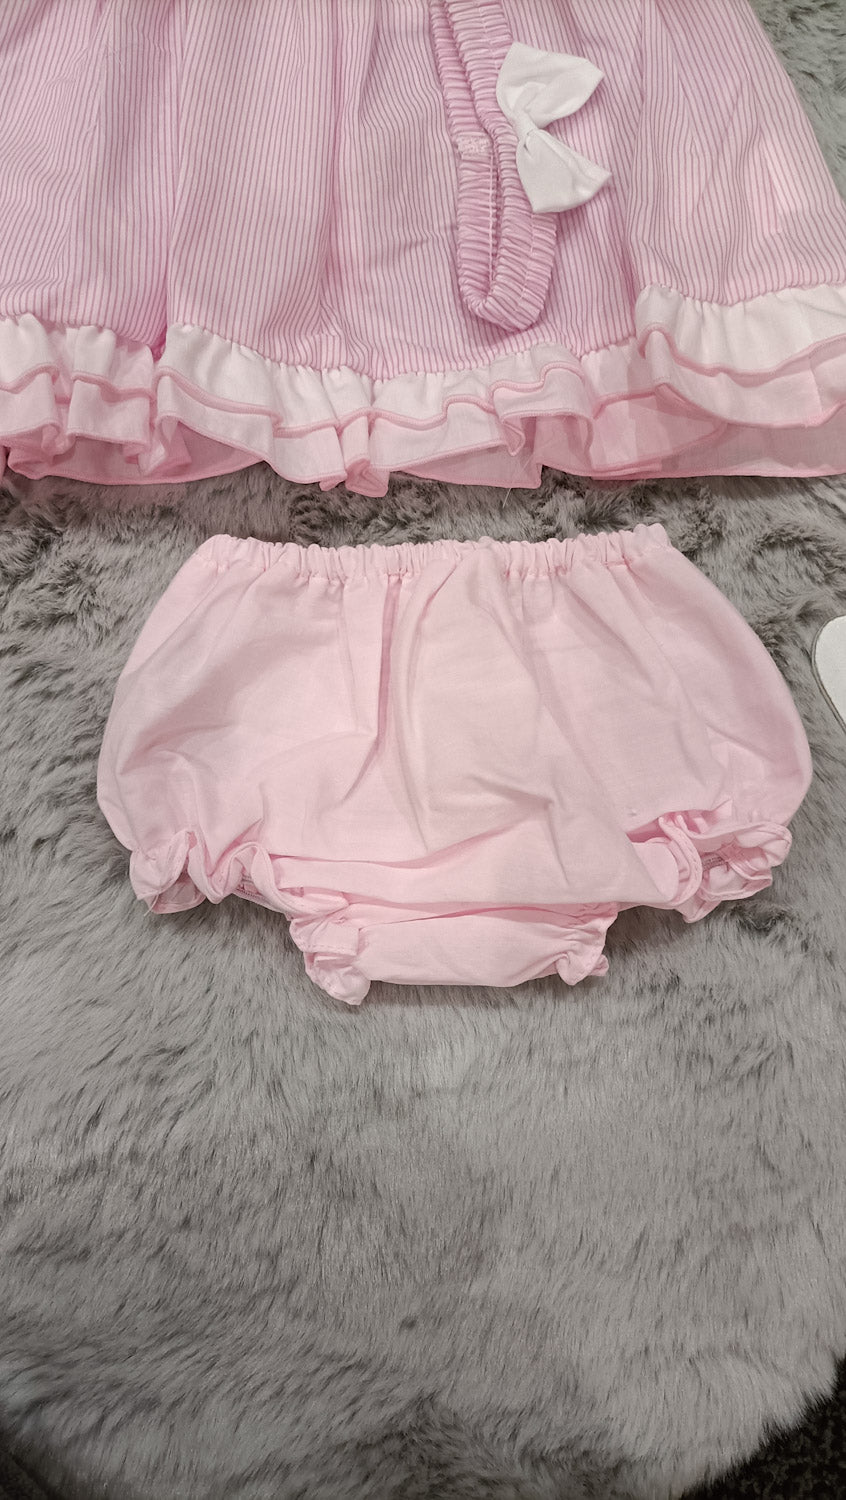 3 Piece Pinstripe Bow Dress - Pink/White